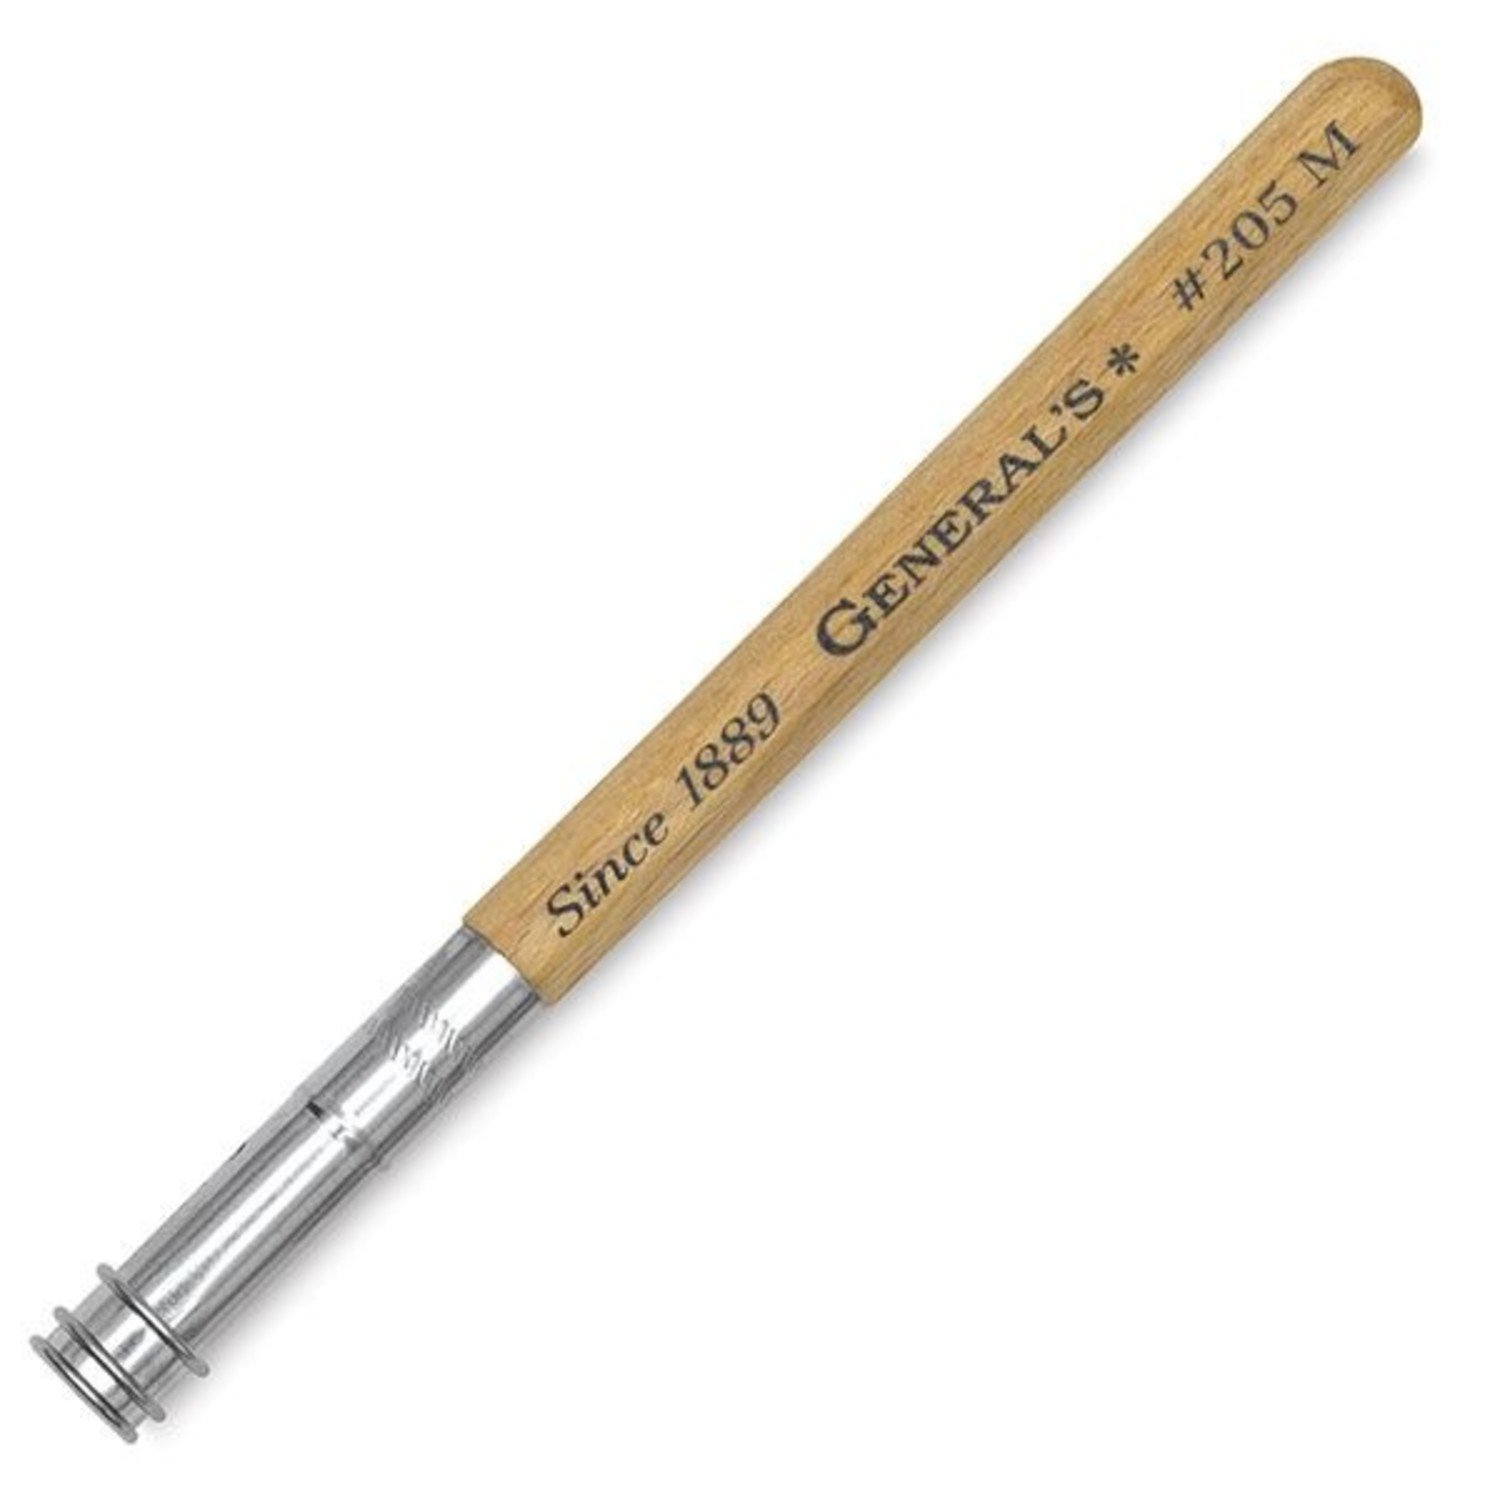 Pencil Length Extender